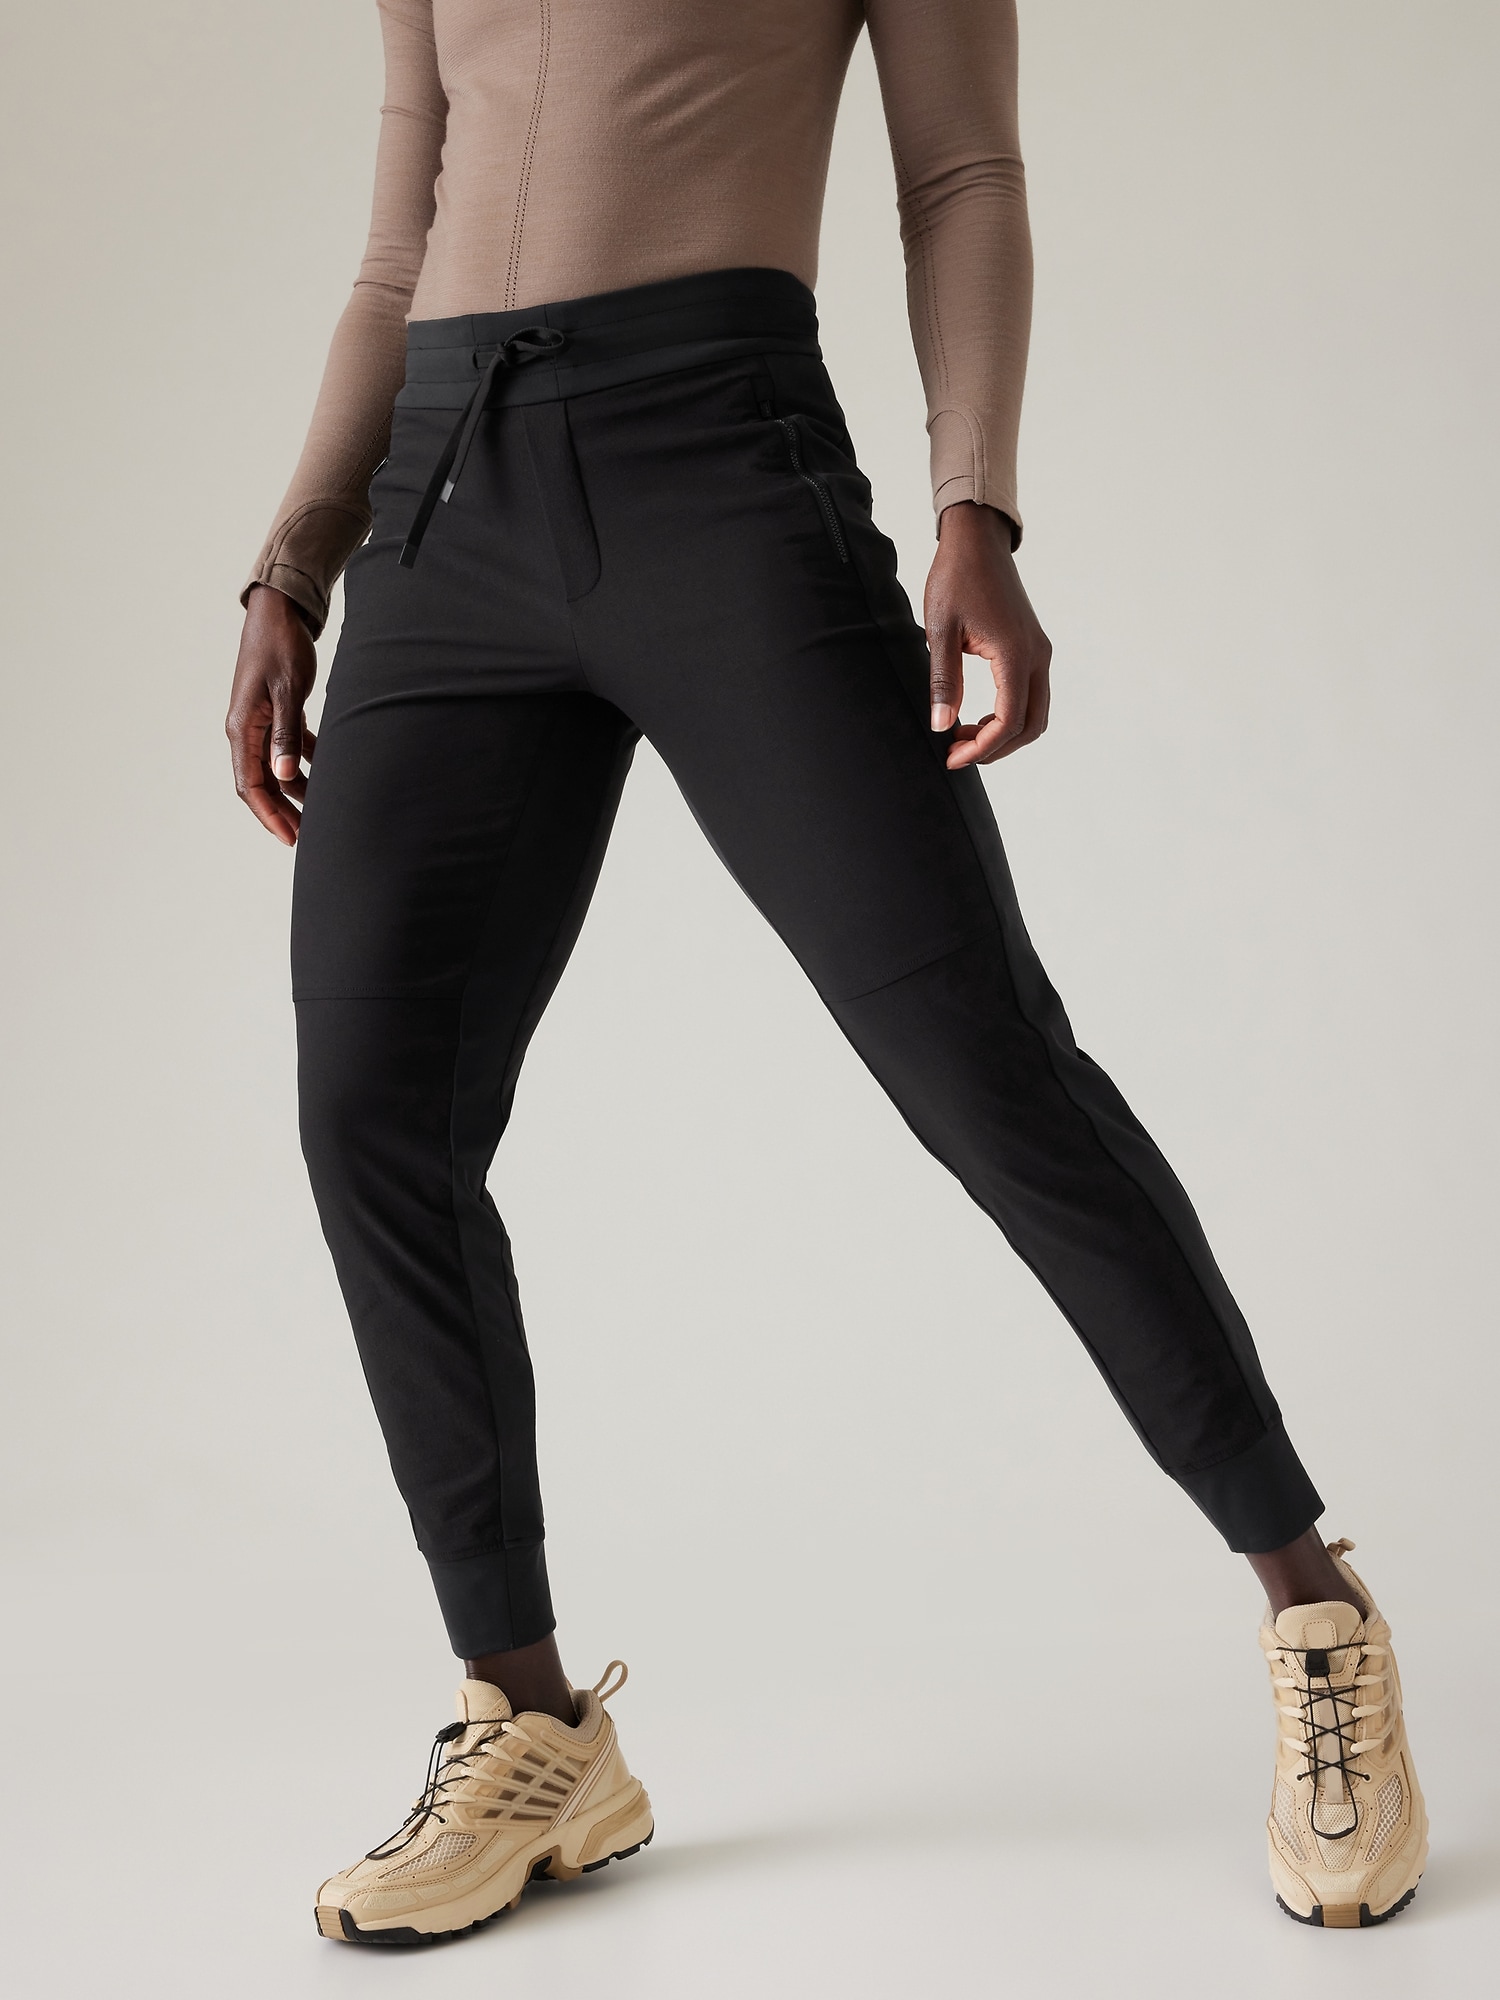 Athleta Mesh Contrast Crop Leggings SZ M Black Side Pockets Active